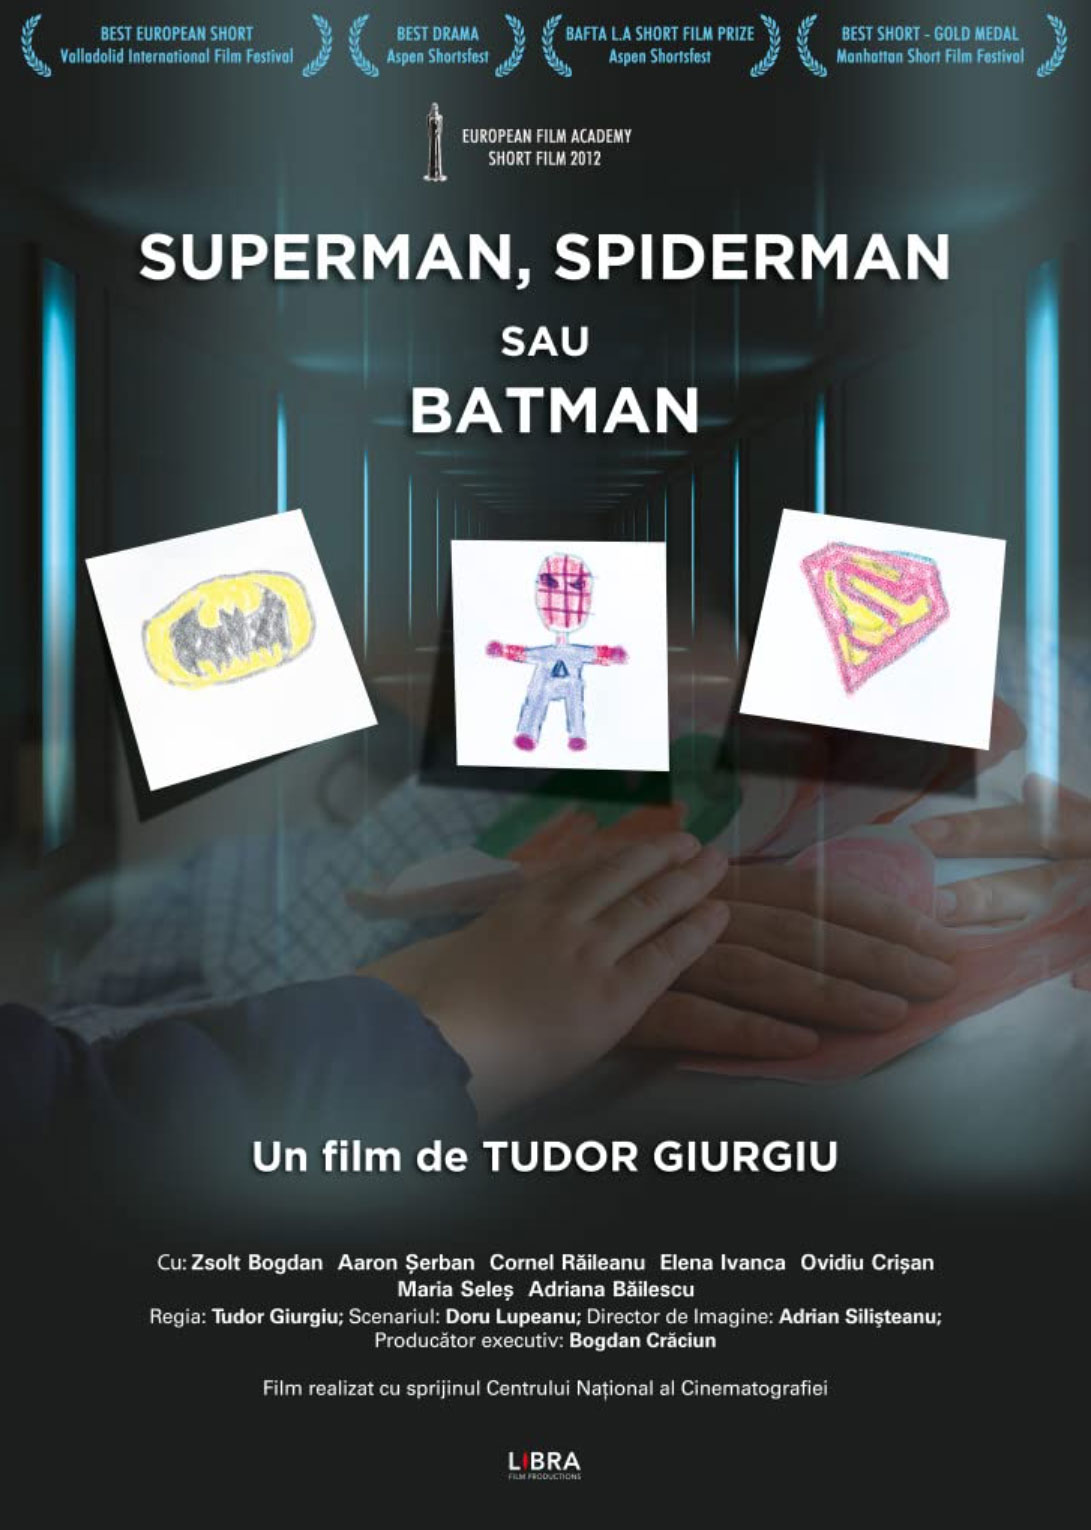 Superman, Spiderman or Batman